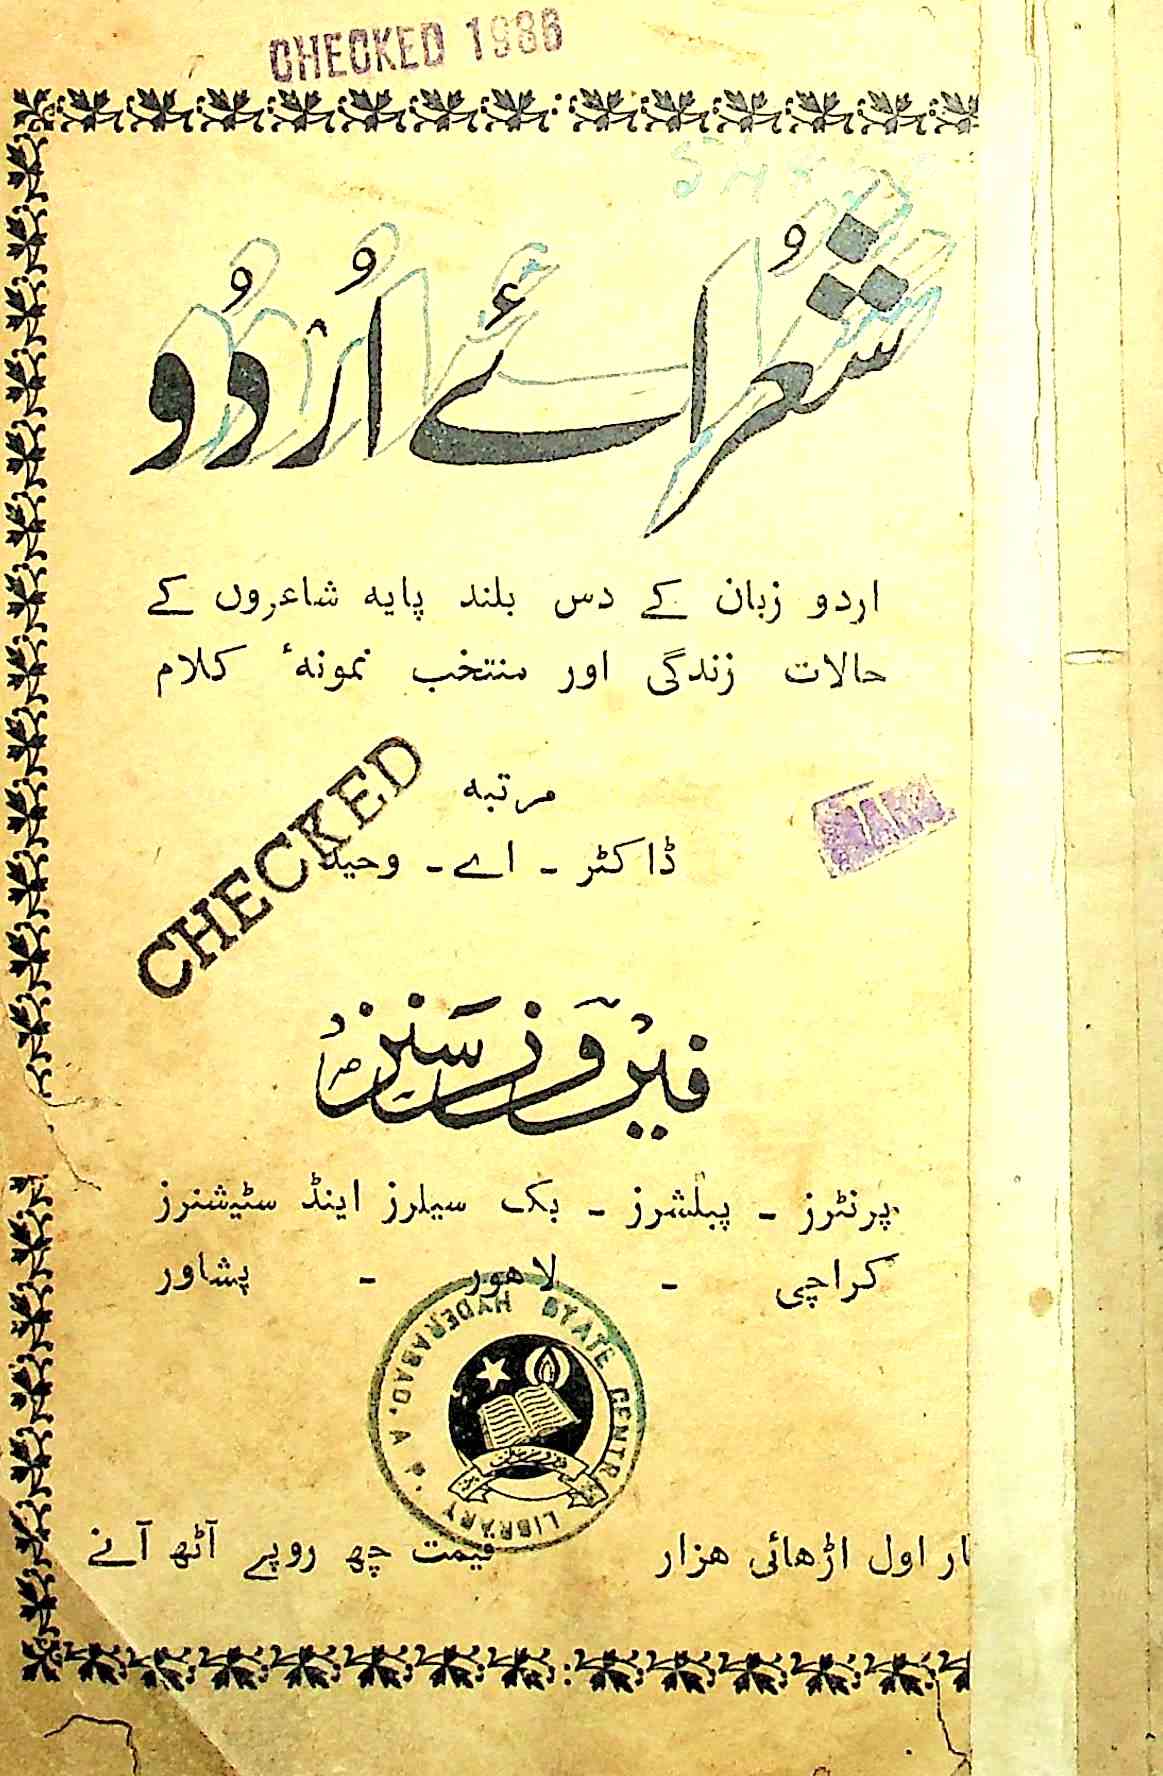 Shora-e-Urdu